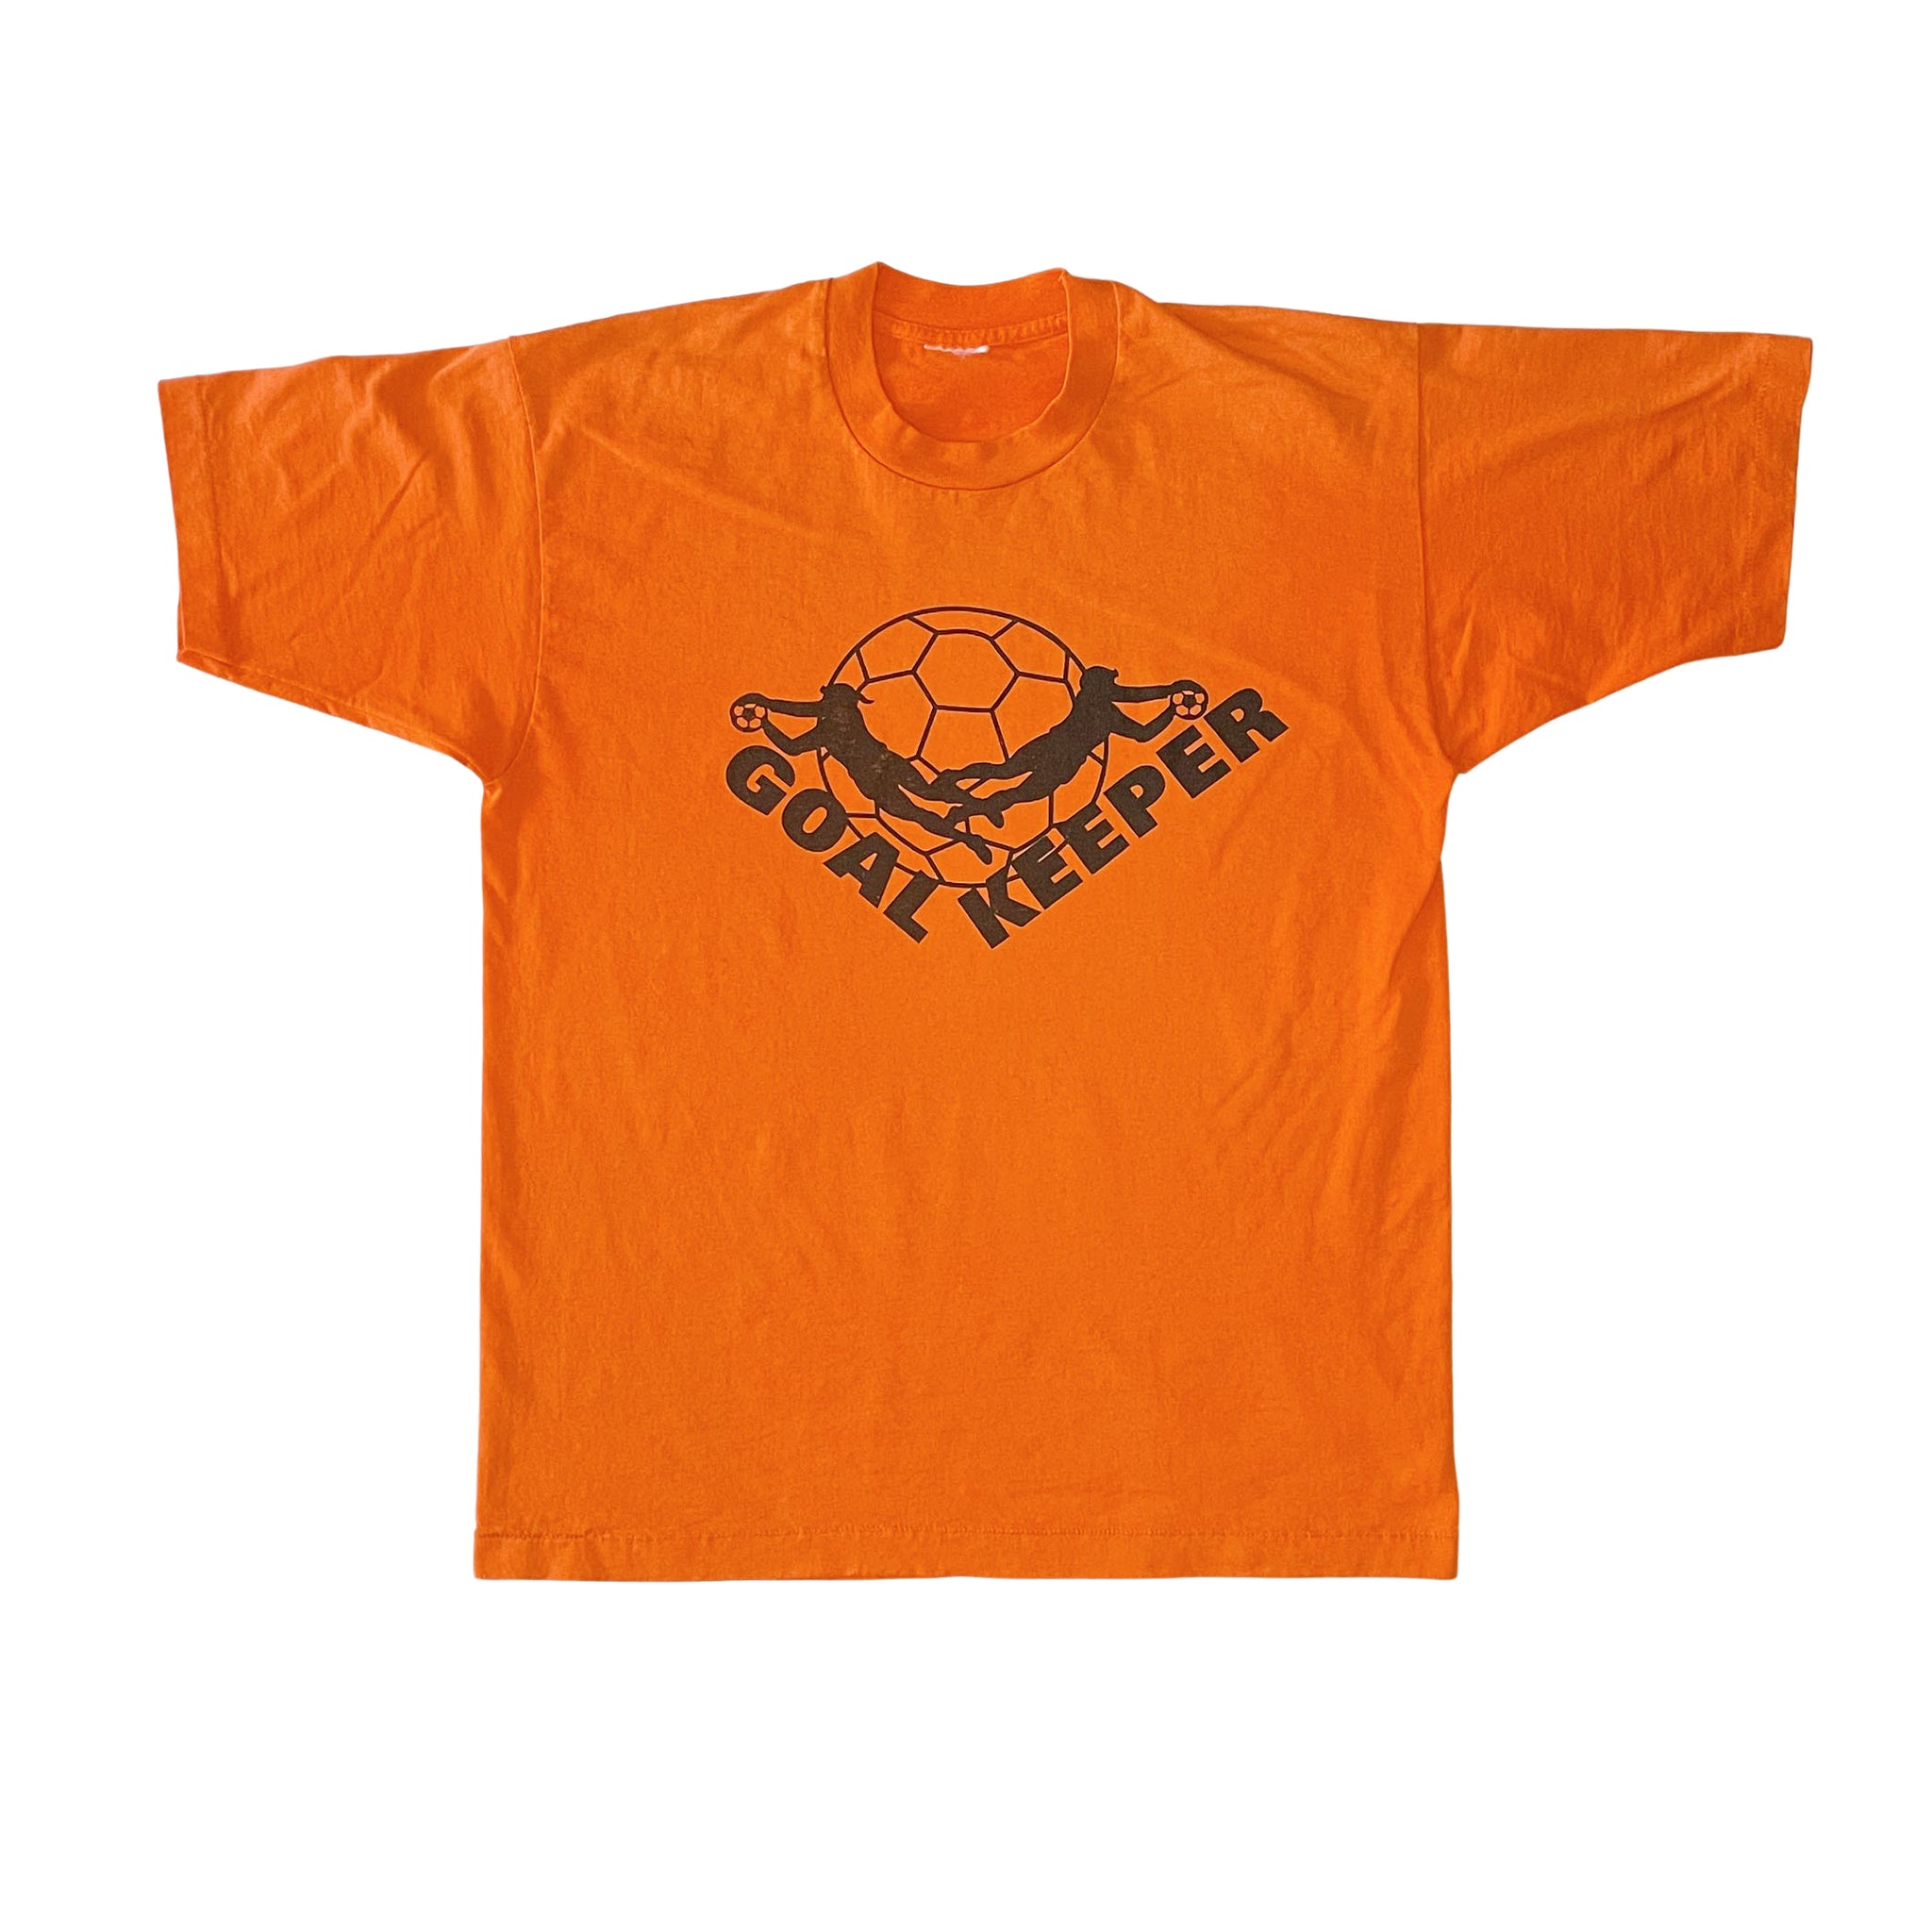 Goalkeeper Graphic T-Shirt - L